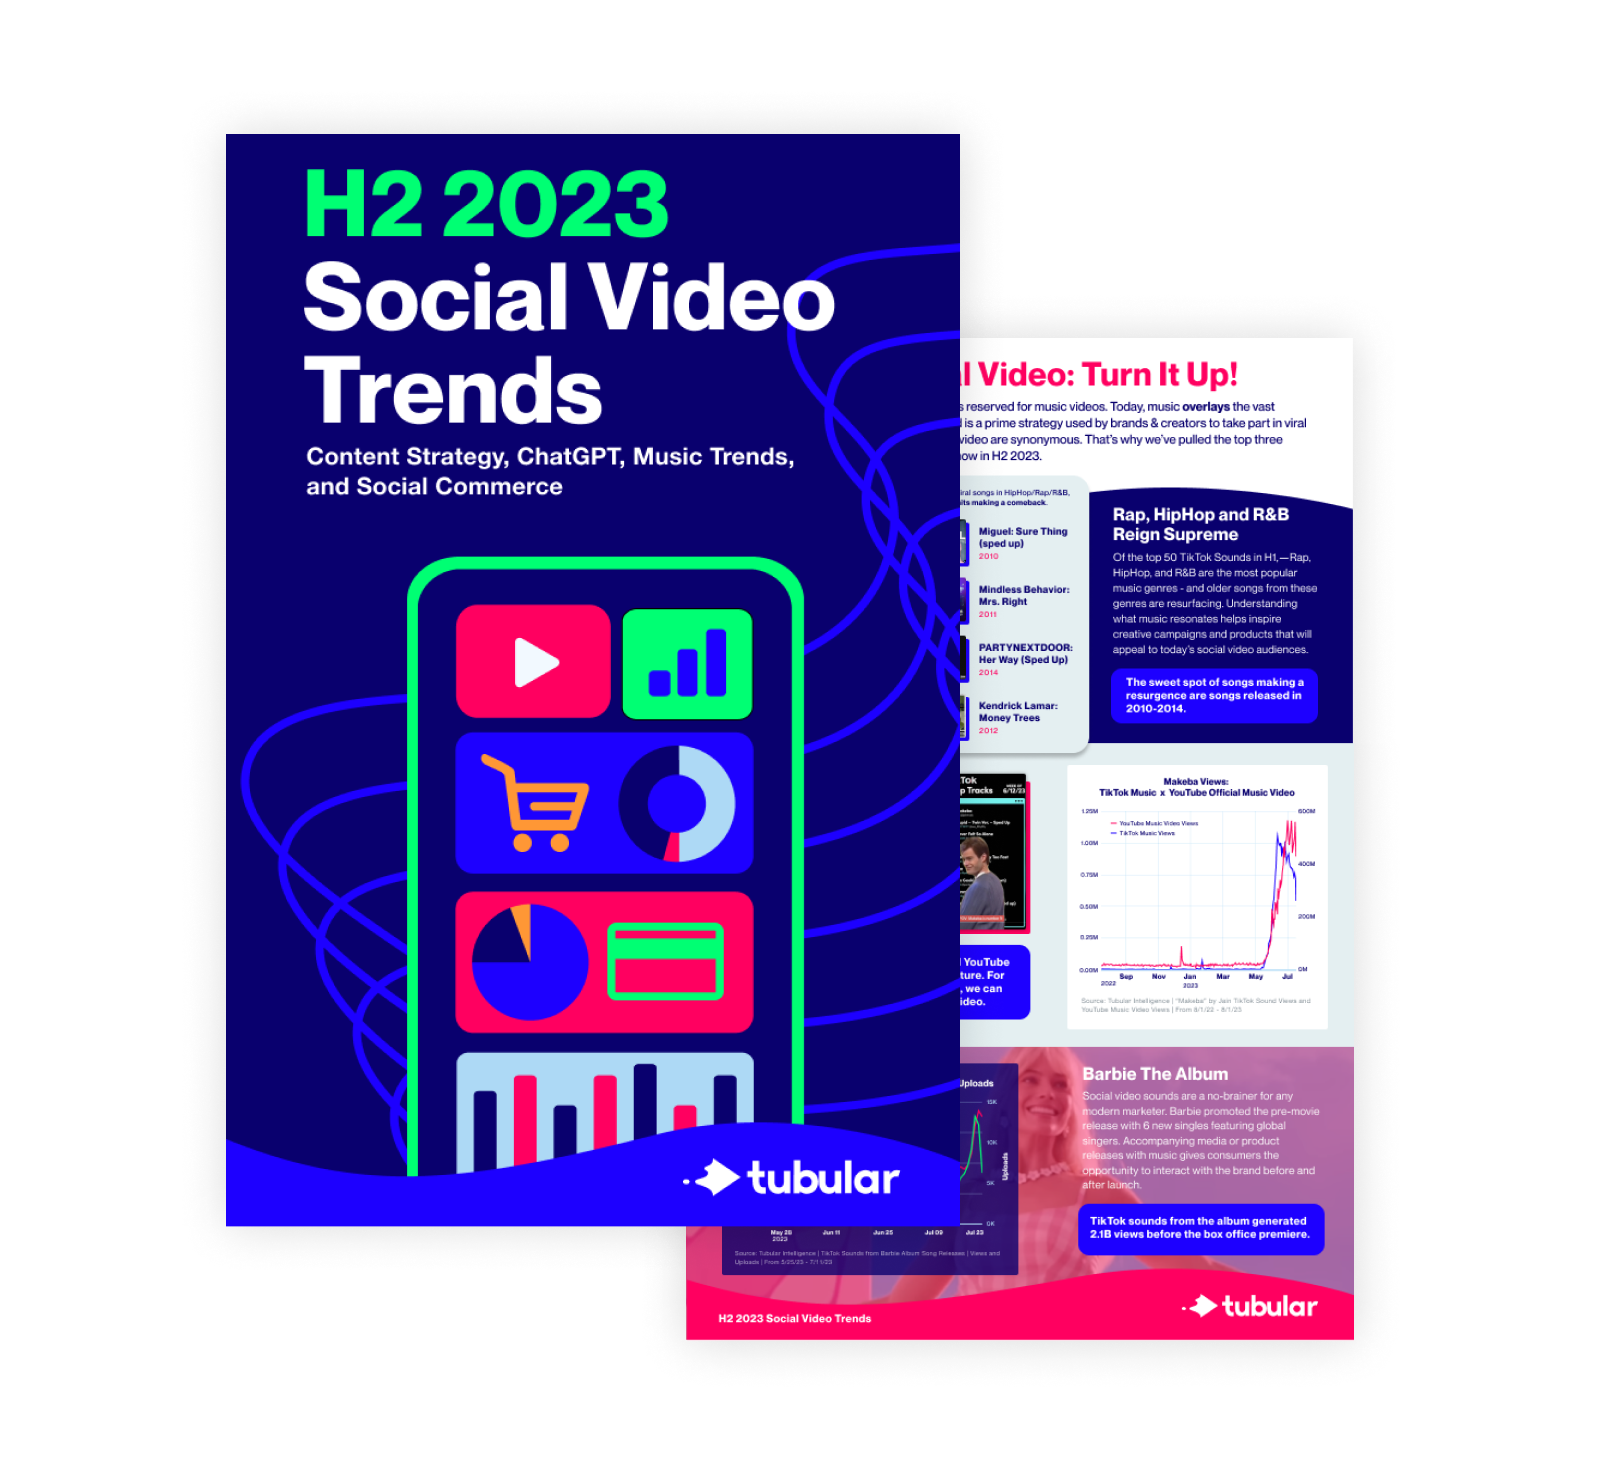 H2 2023 Social Video Trends